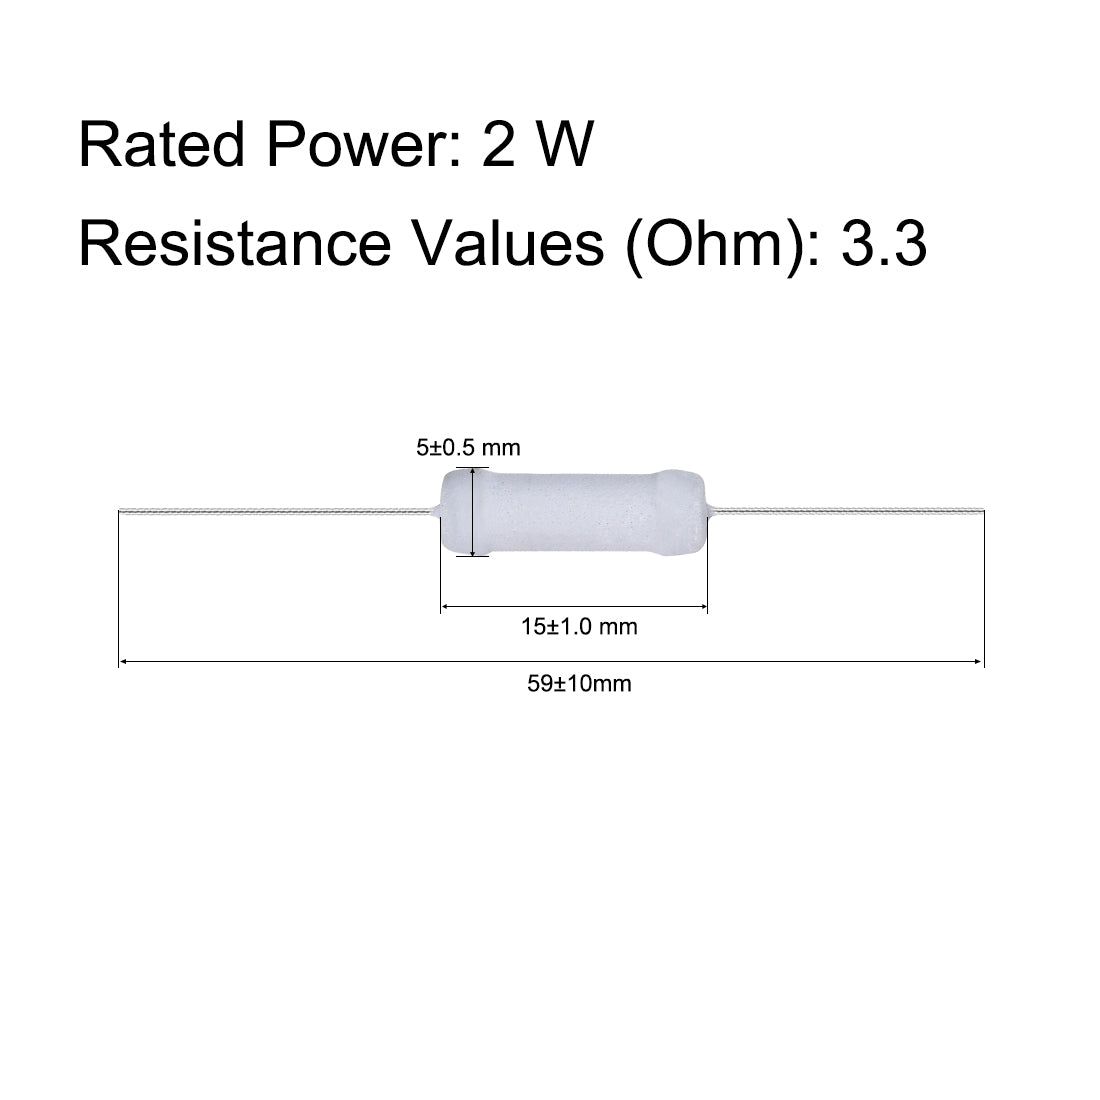 uxcell Uxcell 60pcs 2W 2 Watt Metal Oxide Film Resistor Axile Lead 3.3 Ohm ±5% Tolerance